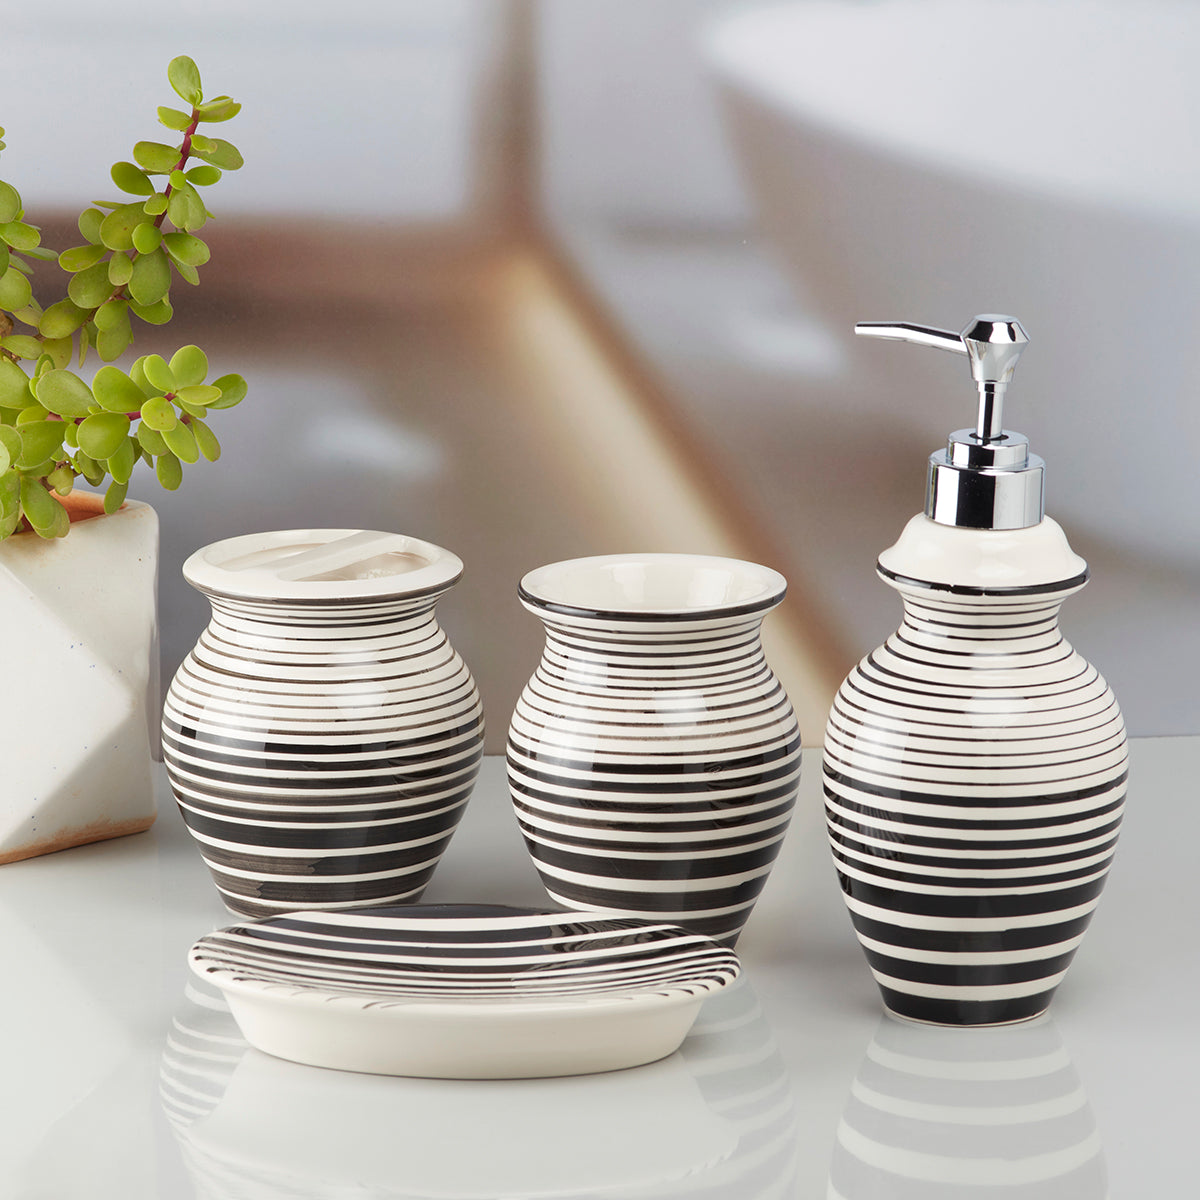 Ceramic Bathroom Accessories Set of 4 Bath Set with Soap Dispenser (10187)